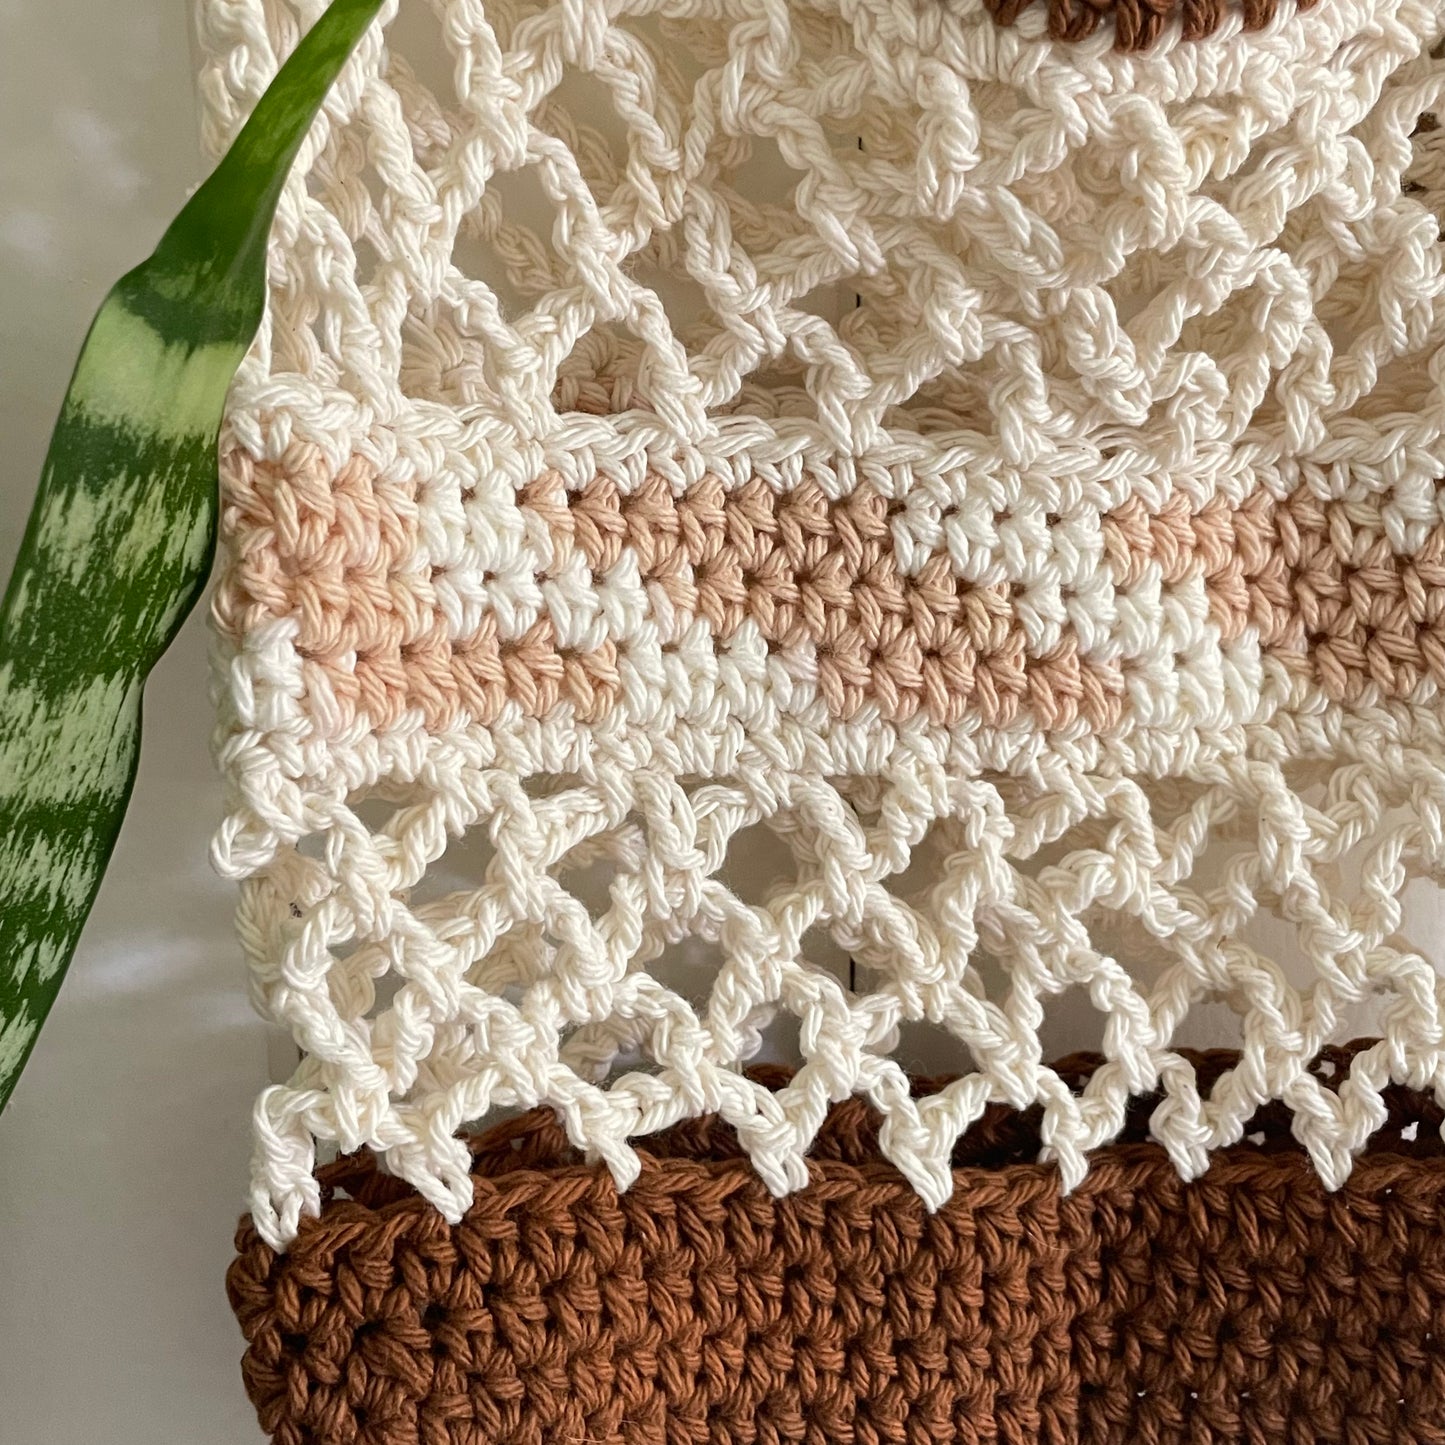 Sandy Beaches Tote Bag Purse Cotton Reusable Boho Multicolor Hand Crocheted Knit Cream Tan Brown Coastal